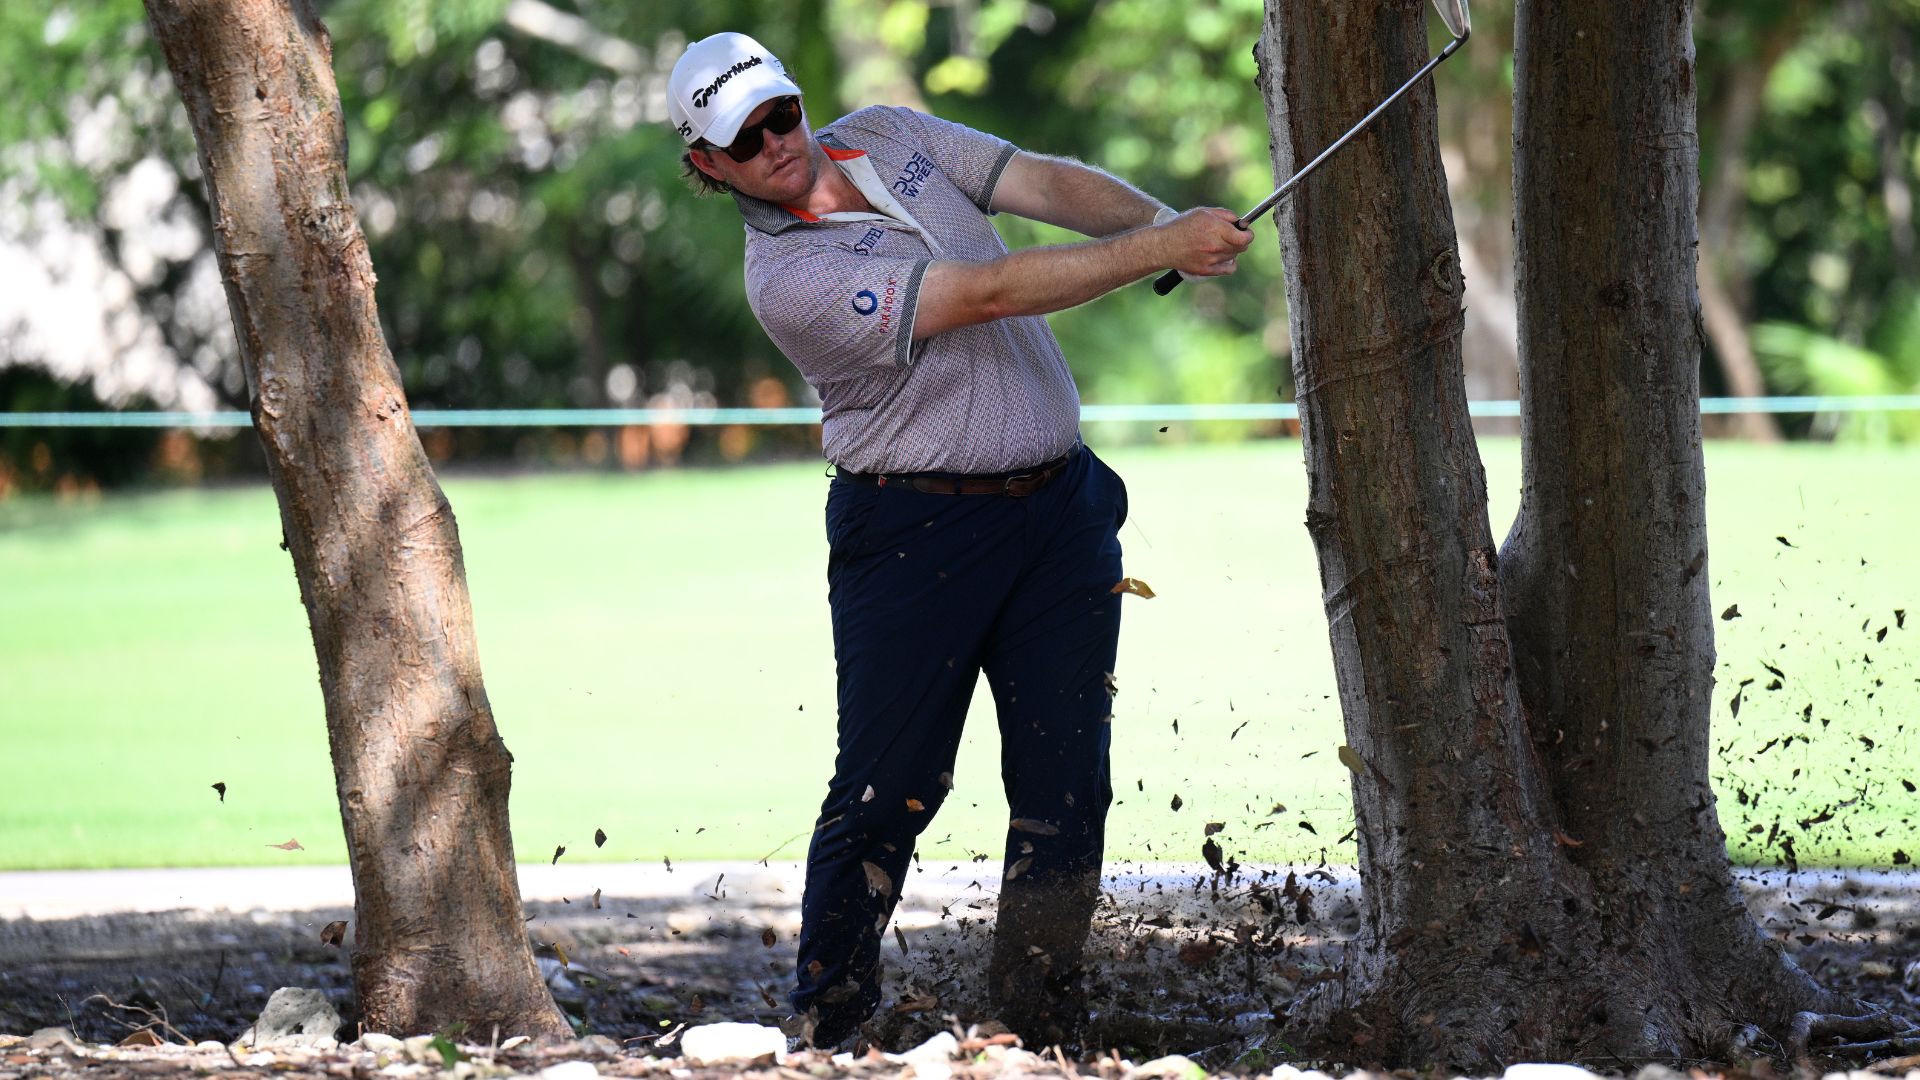 Friday at Mayakoba, Harry Higgs (62) may have found key to ‘unlock’ better golf